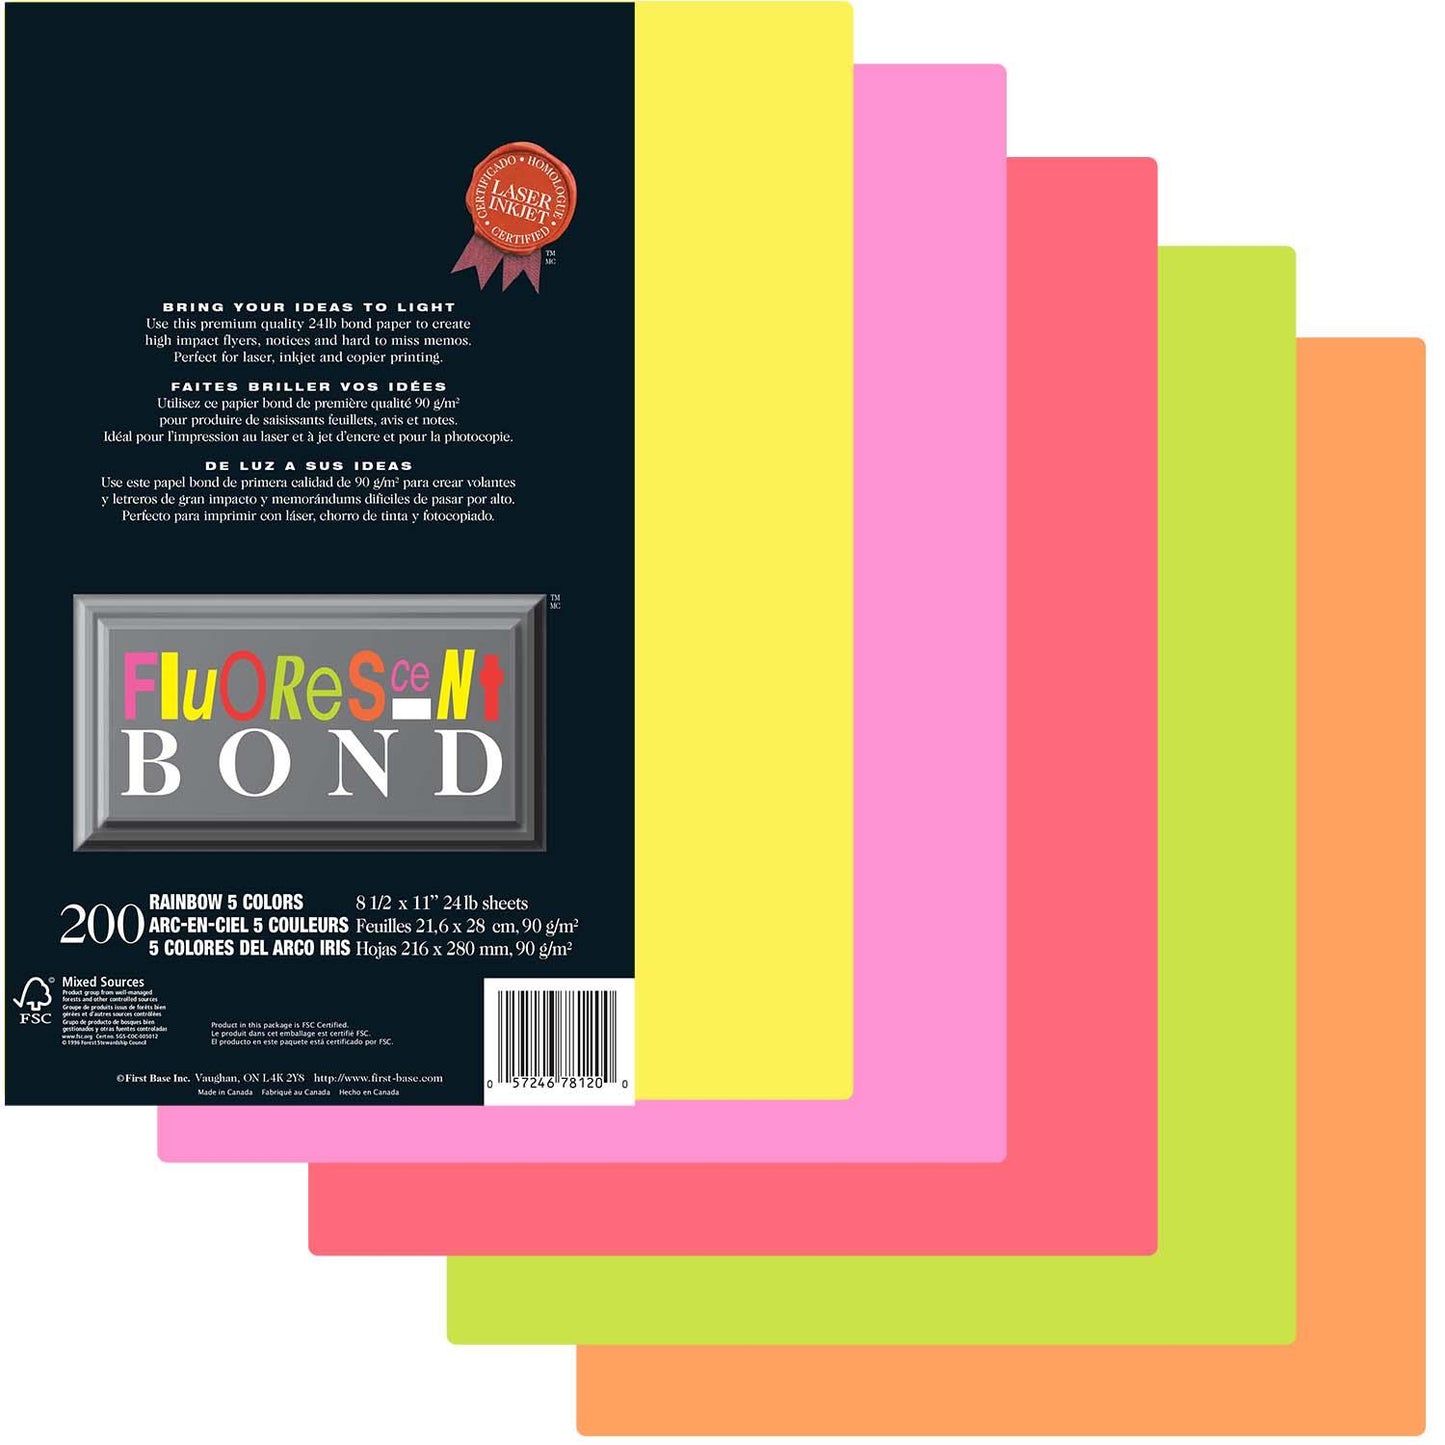 St. James® Fluorescent Bond Paper, Rainbow, 5 Bright Colours, Pack of 200